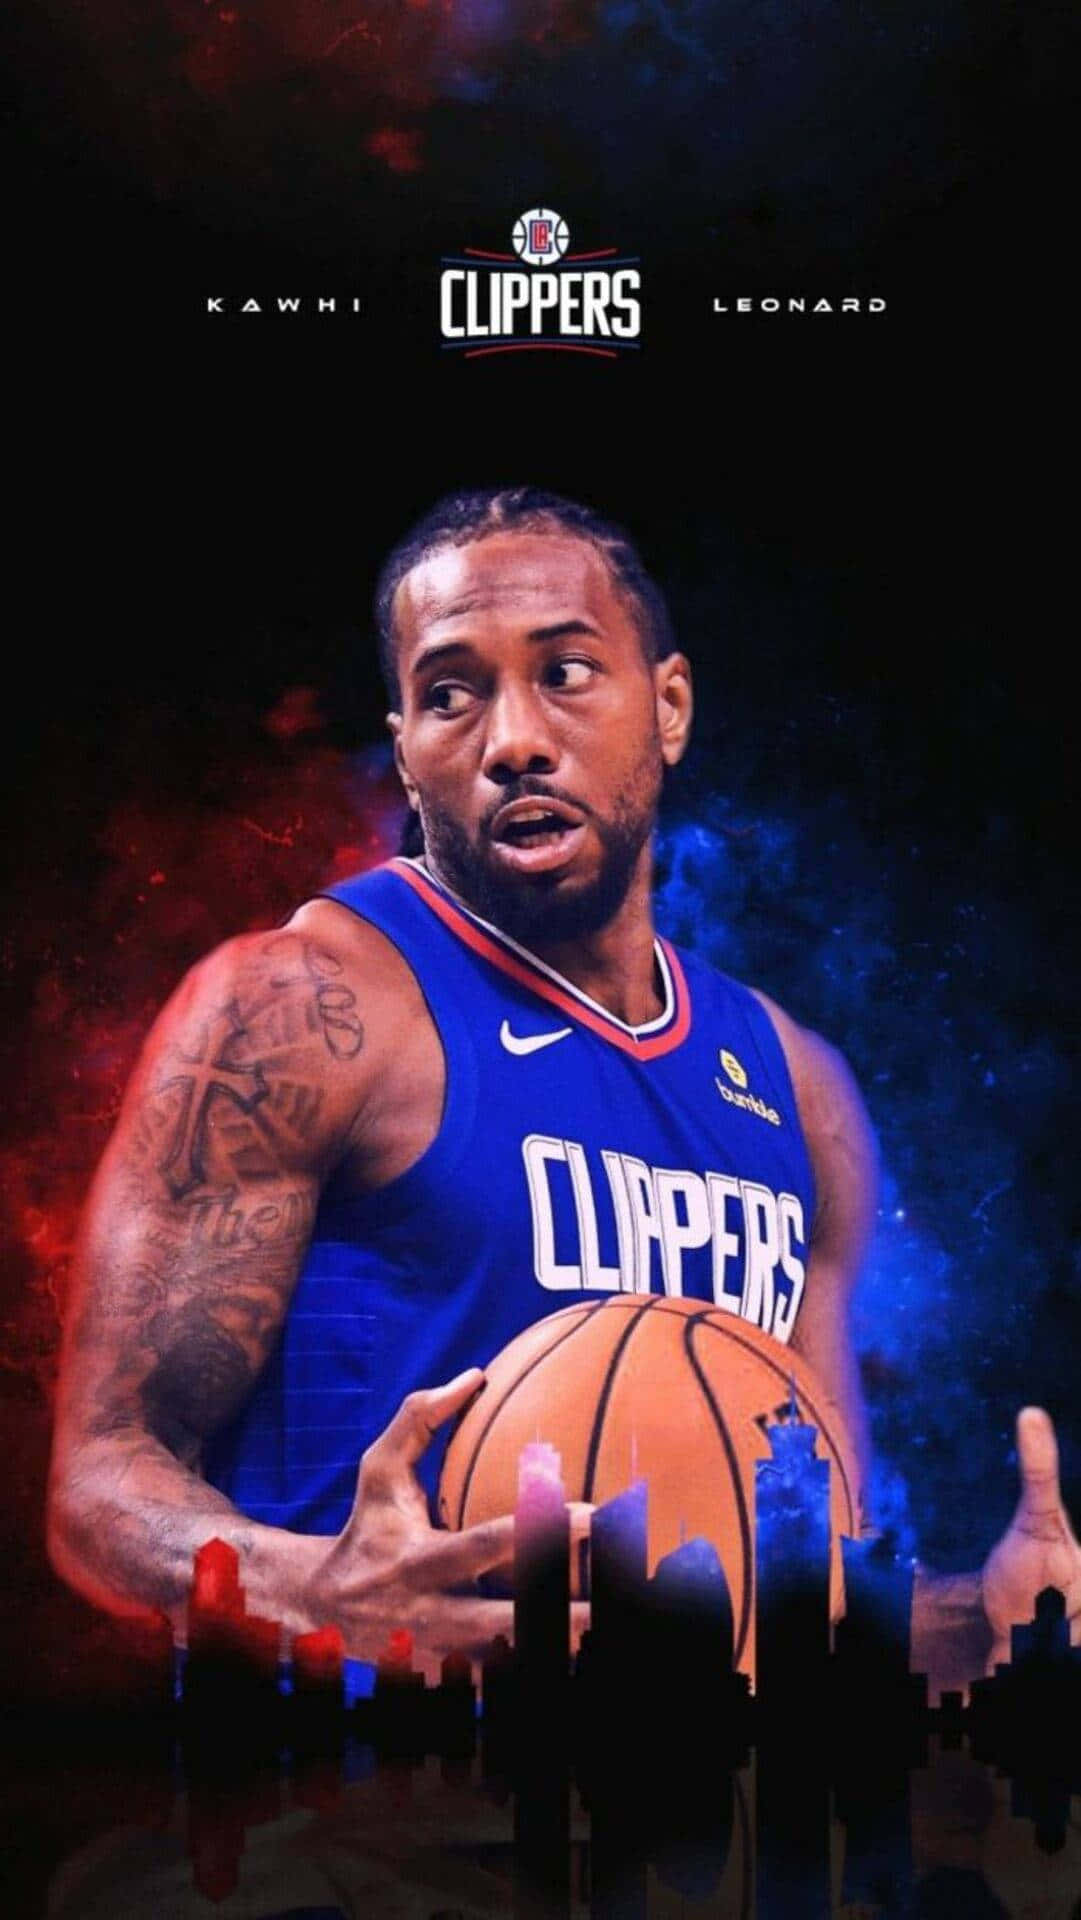 LA Clippers Professional Athlete Kawhi Leonard Digital Artwork Wallpaper